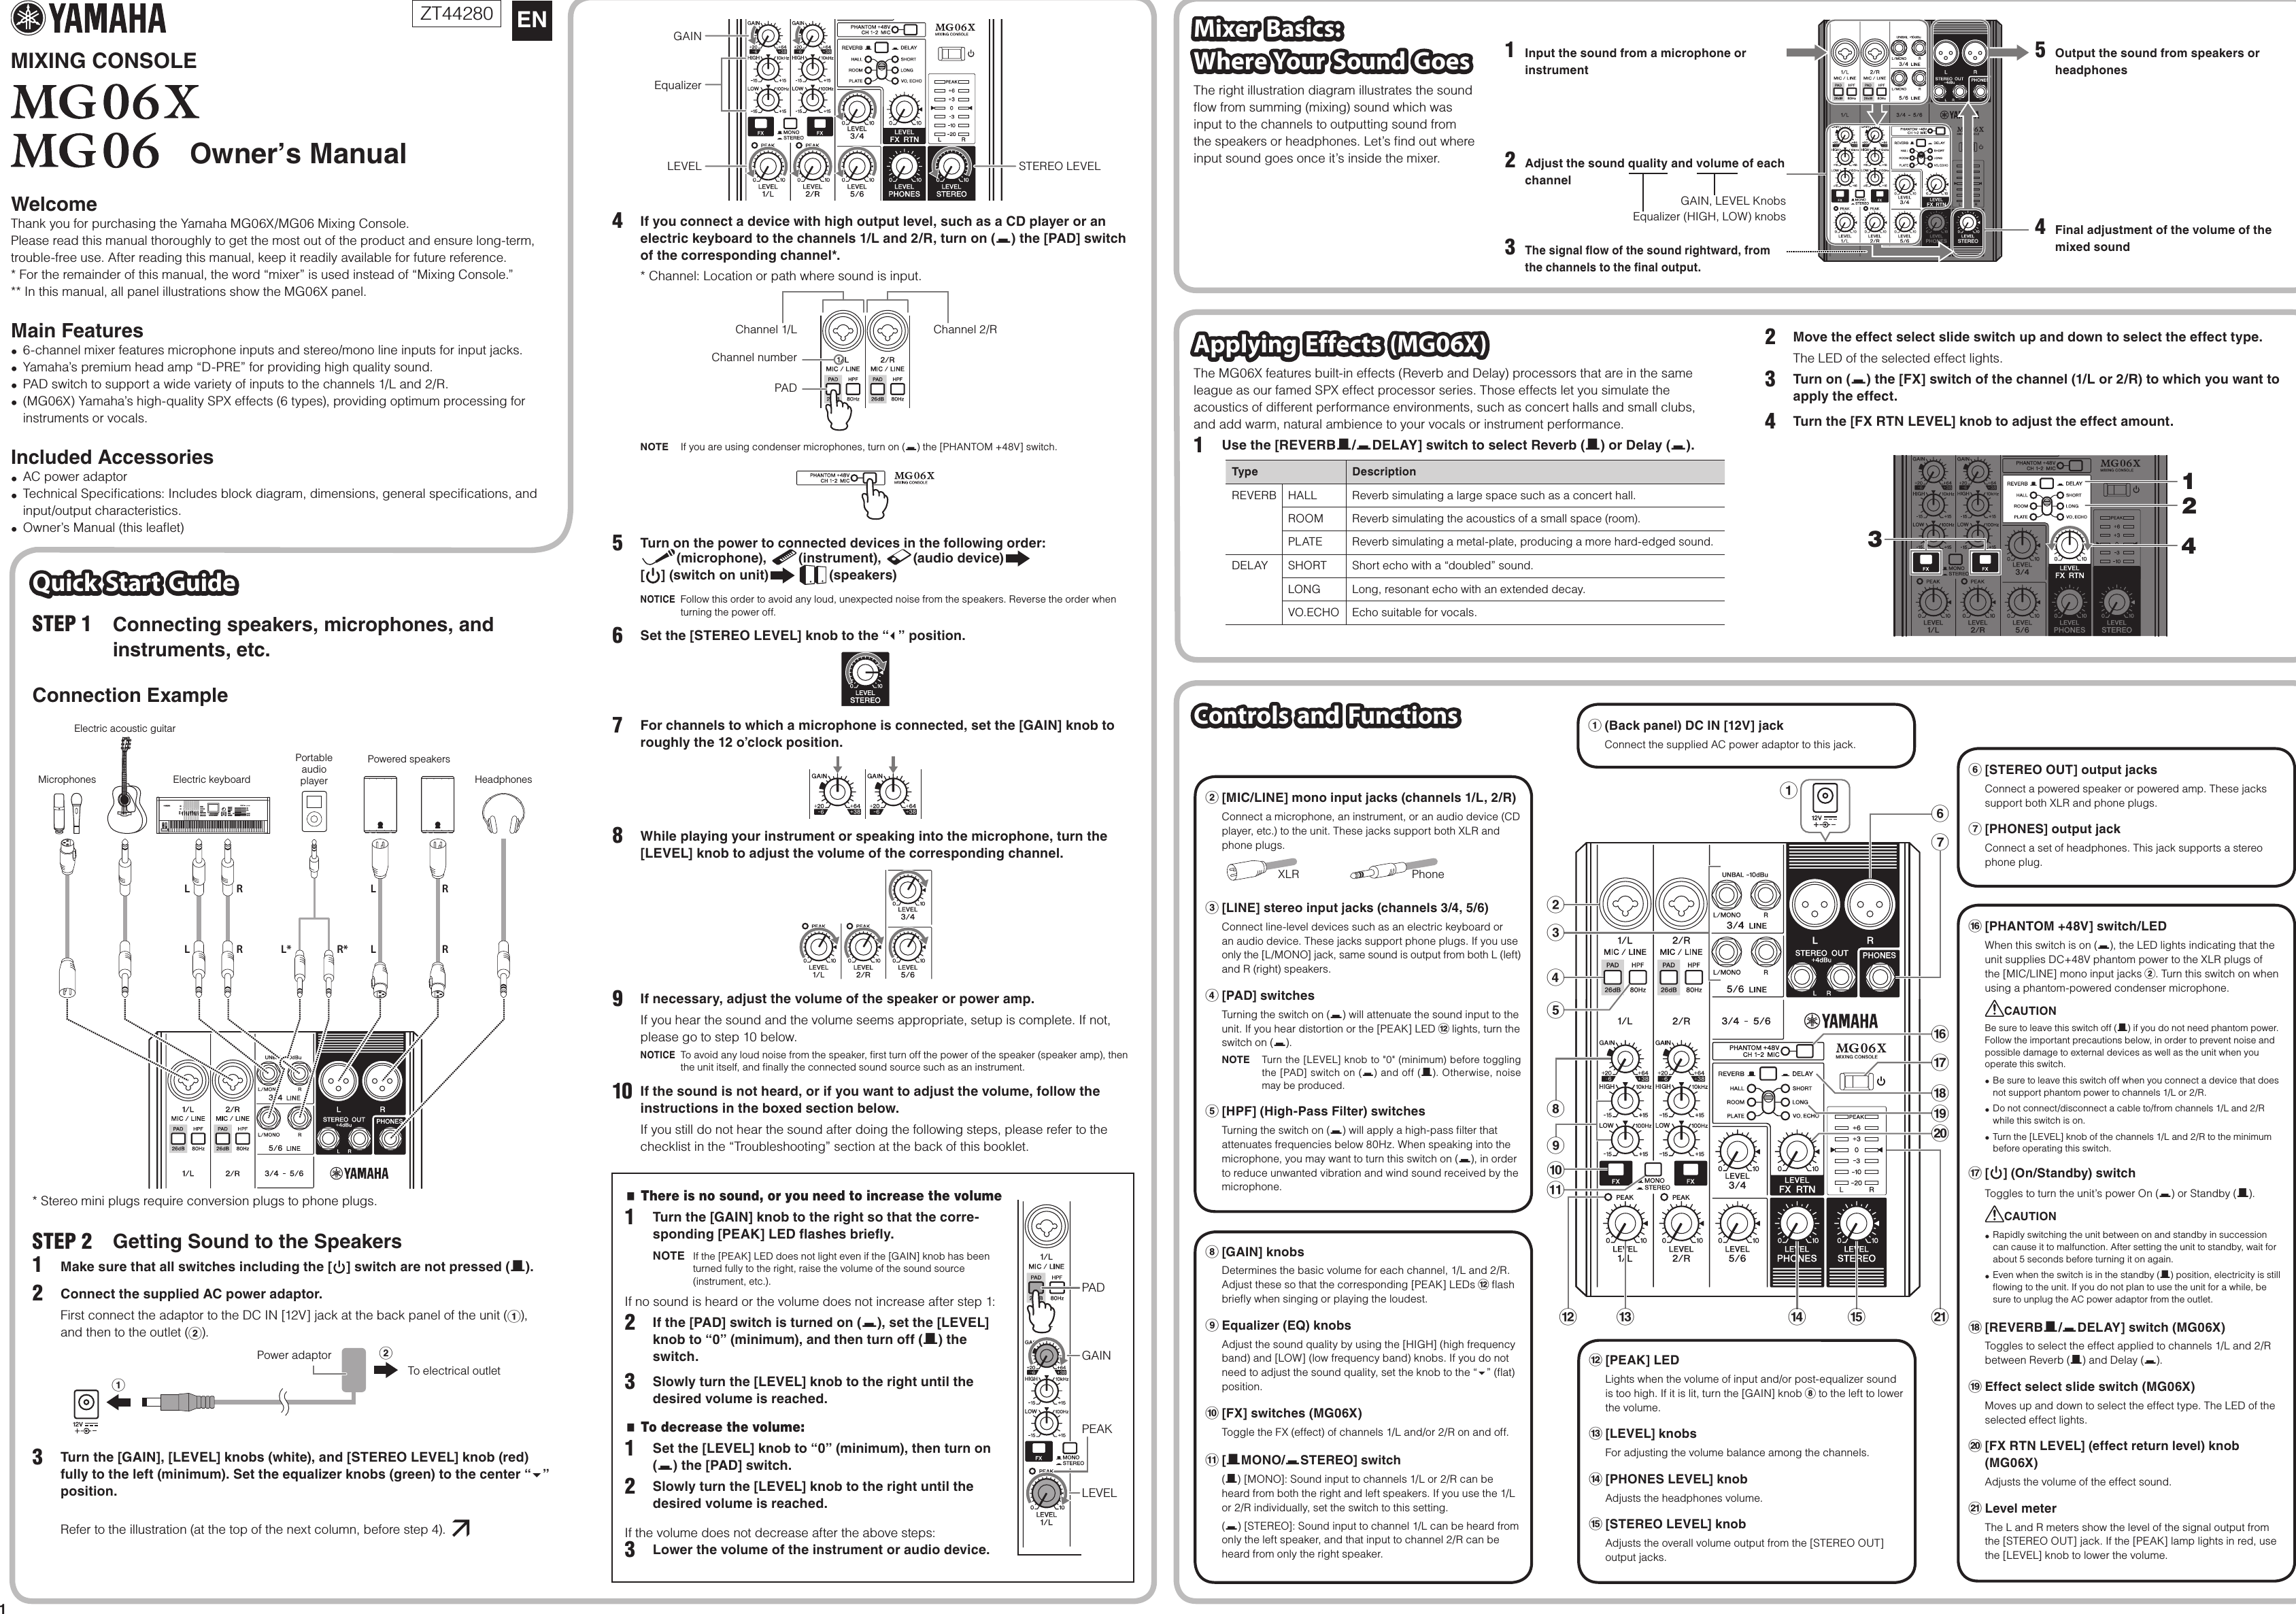 Page 1 of 2 - Yamaha MG06X/MG06 Owner's Manual Mg06x En Om C0